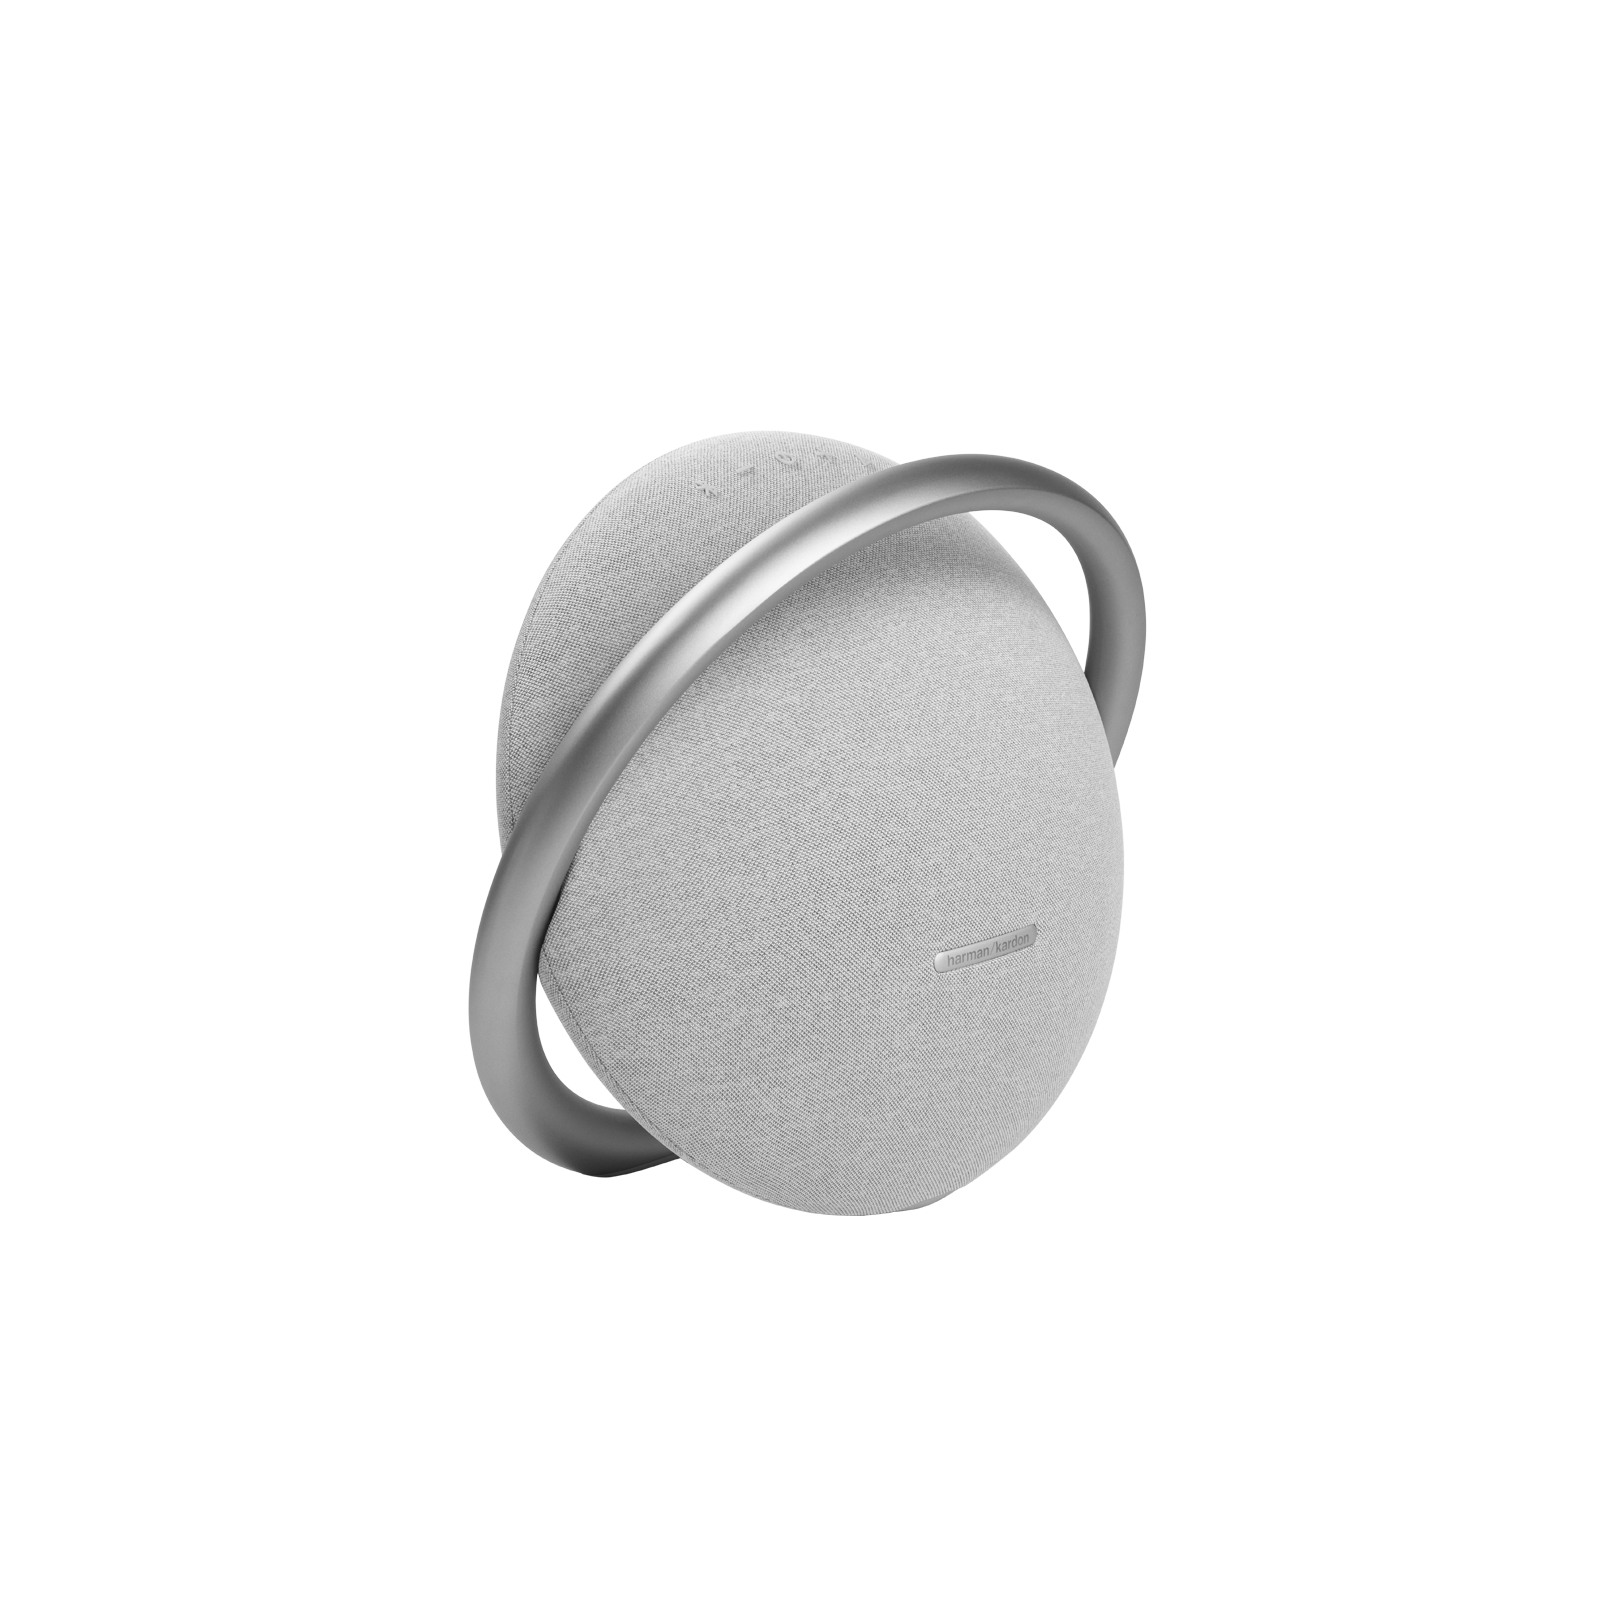 Onyx Studio 7 - Grey - Portable Stereo Bluetooth Speaker - Detailshot 1